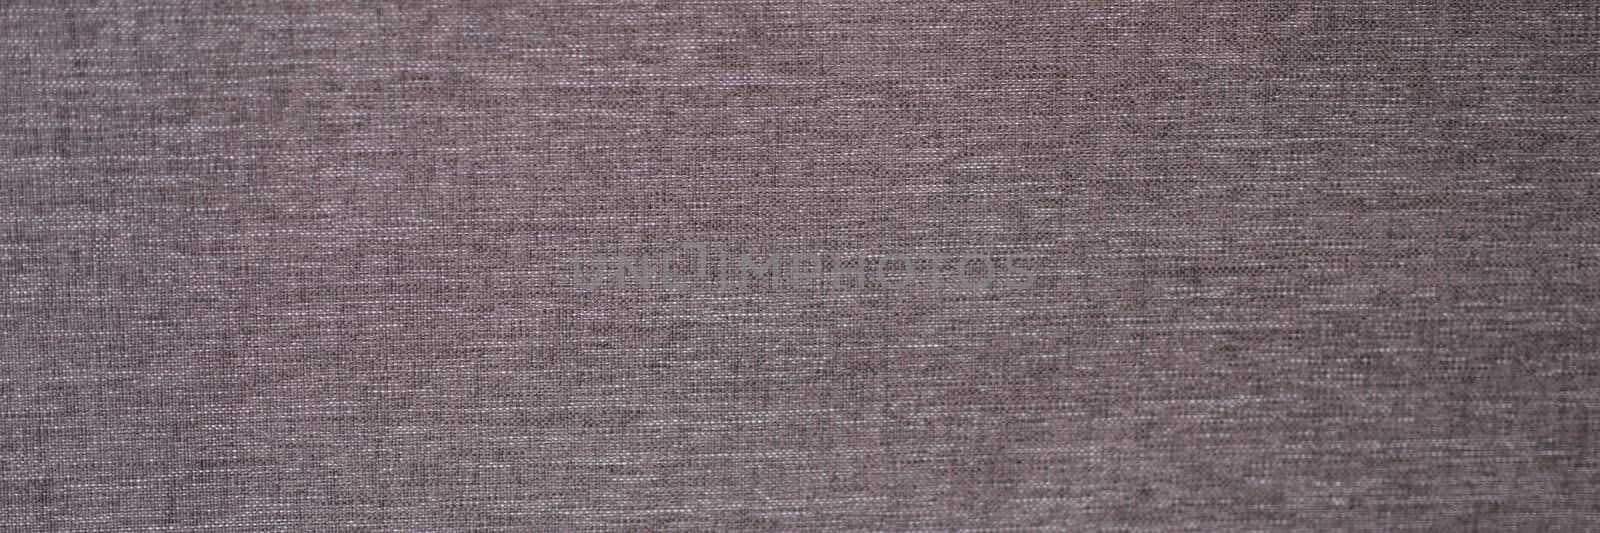 Gray fabric melange heather melange seamless pattern by kuprevich